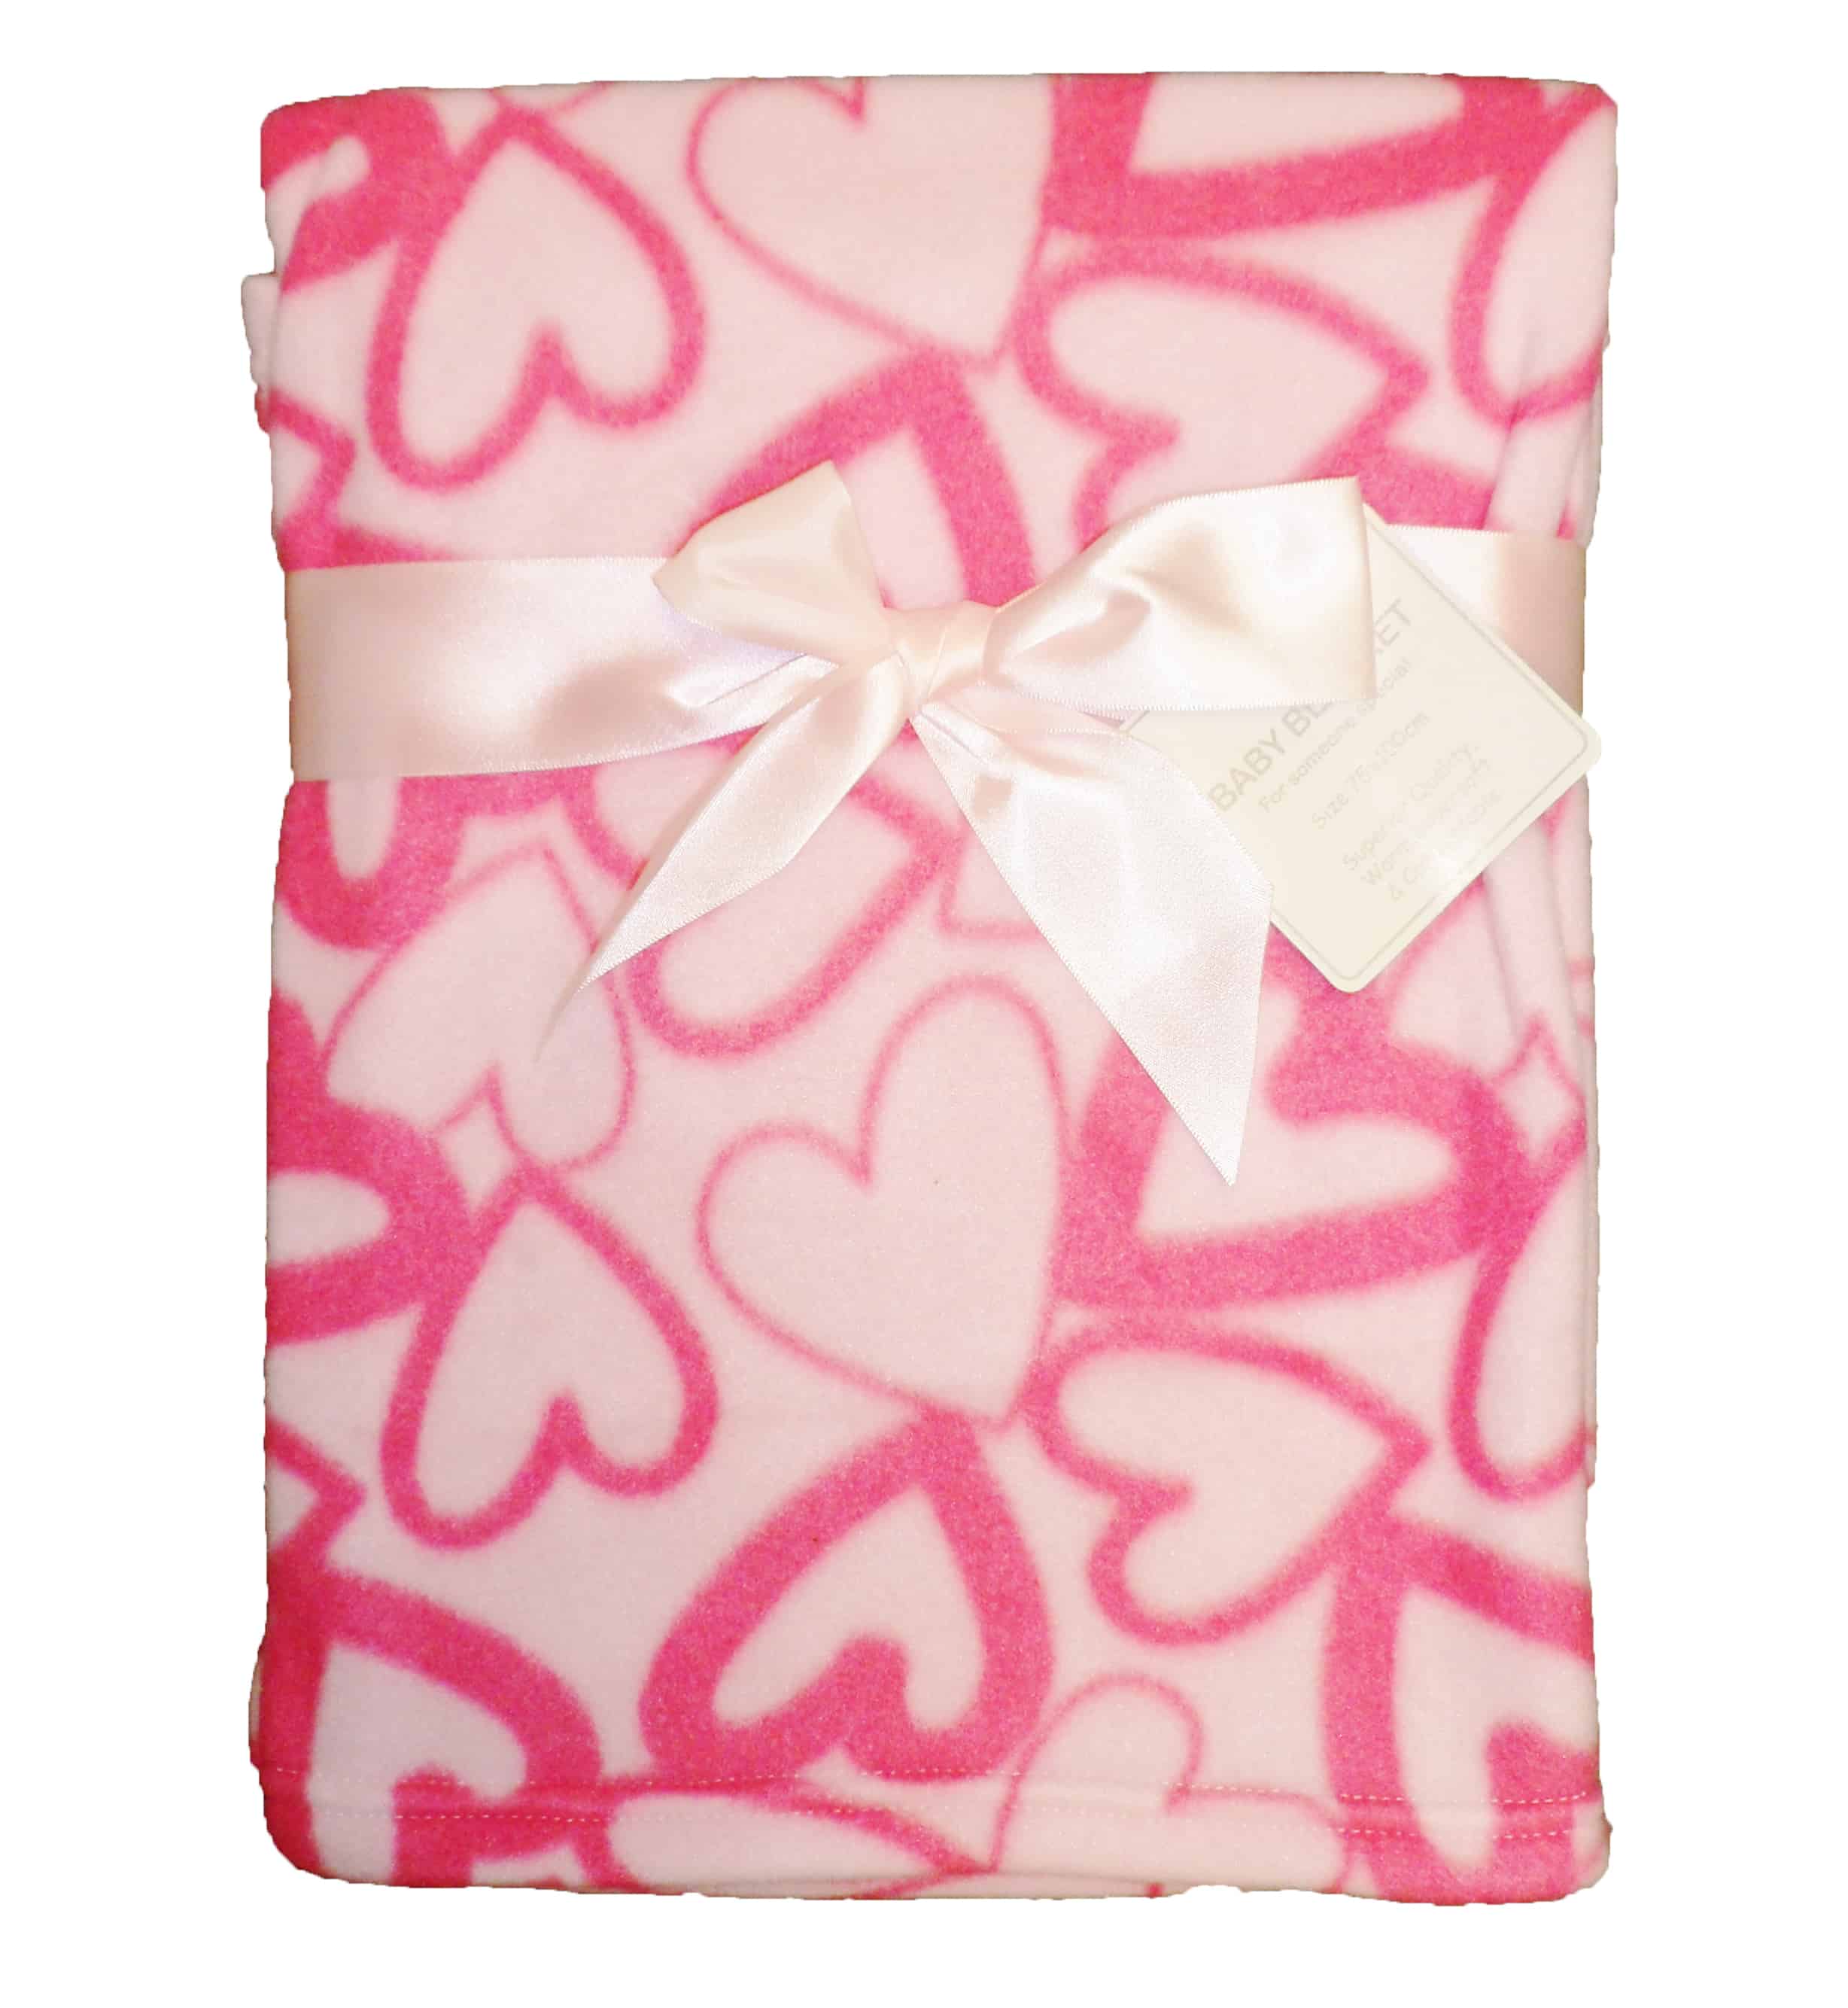 Supersoft Pram/Crib Blanket Large Hearts – Pink